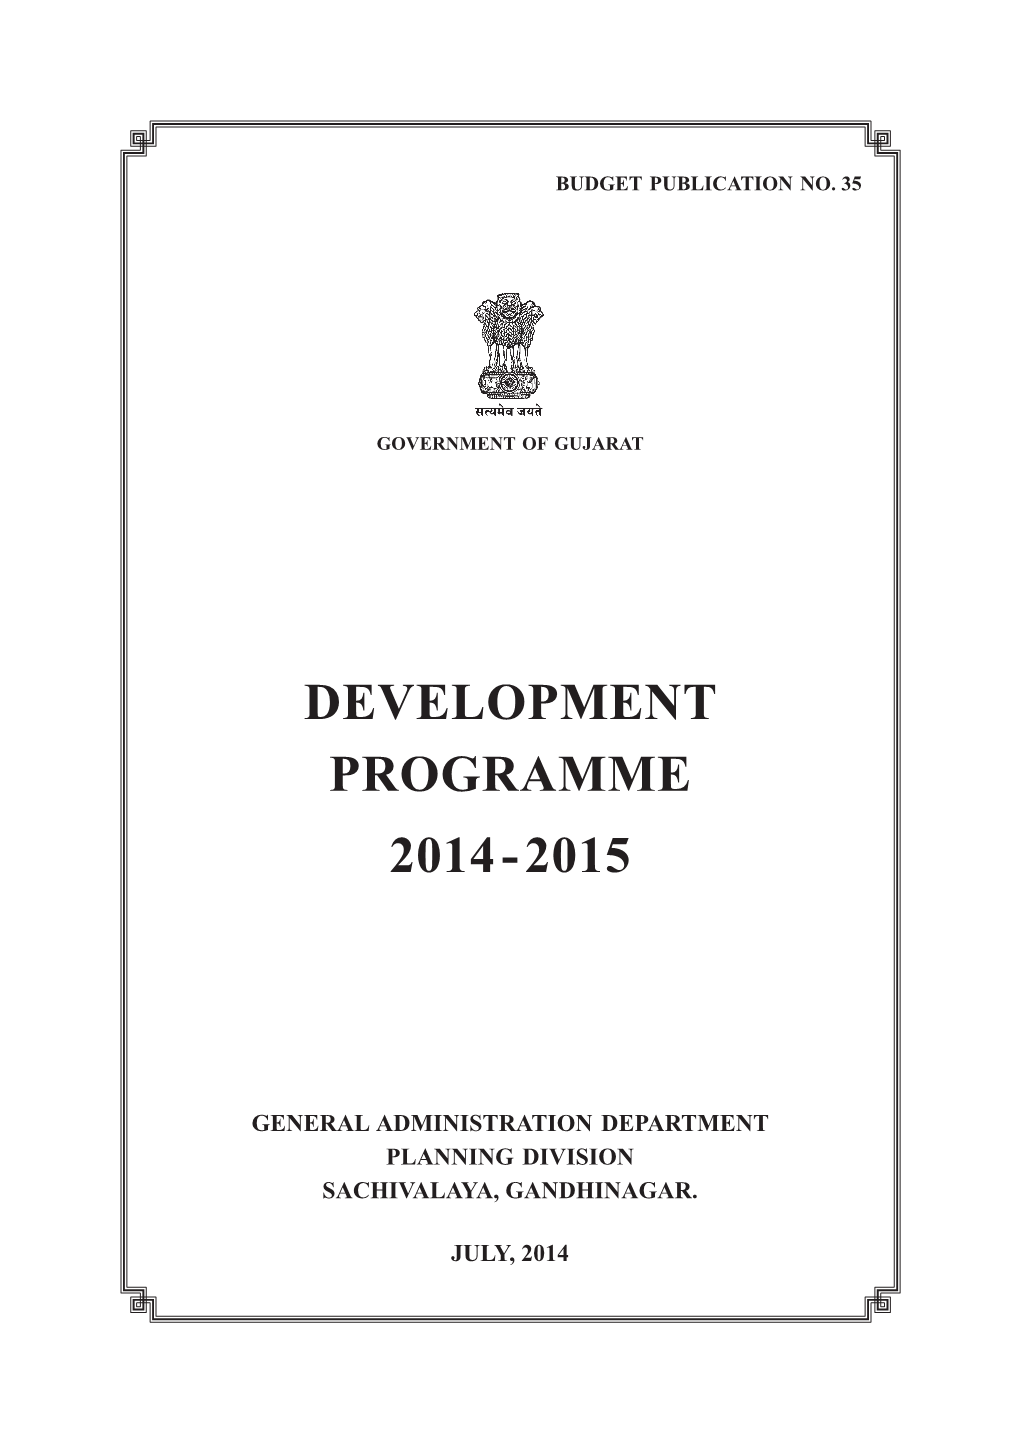 Development Programme 2014-2015